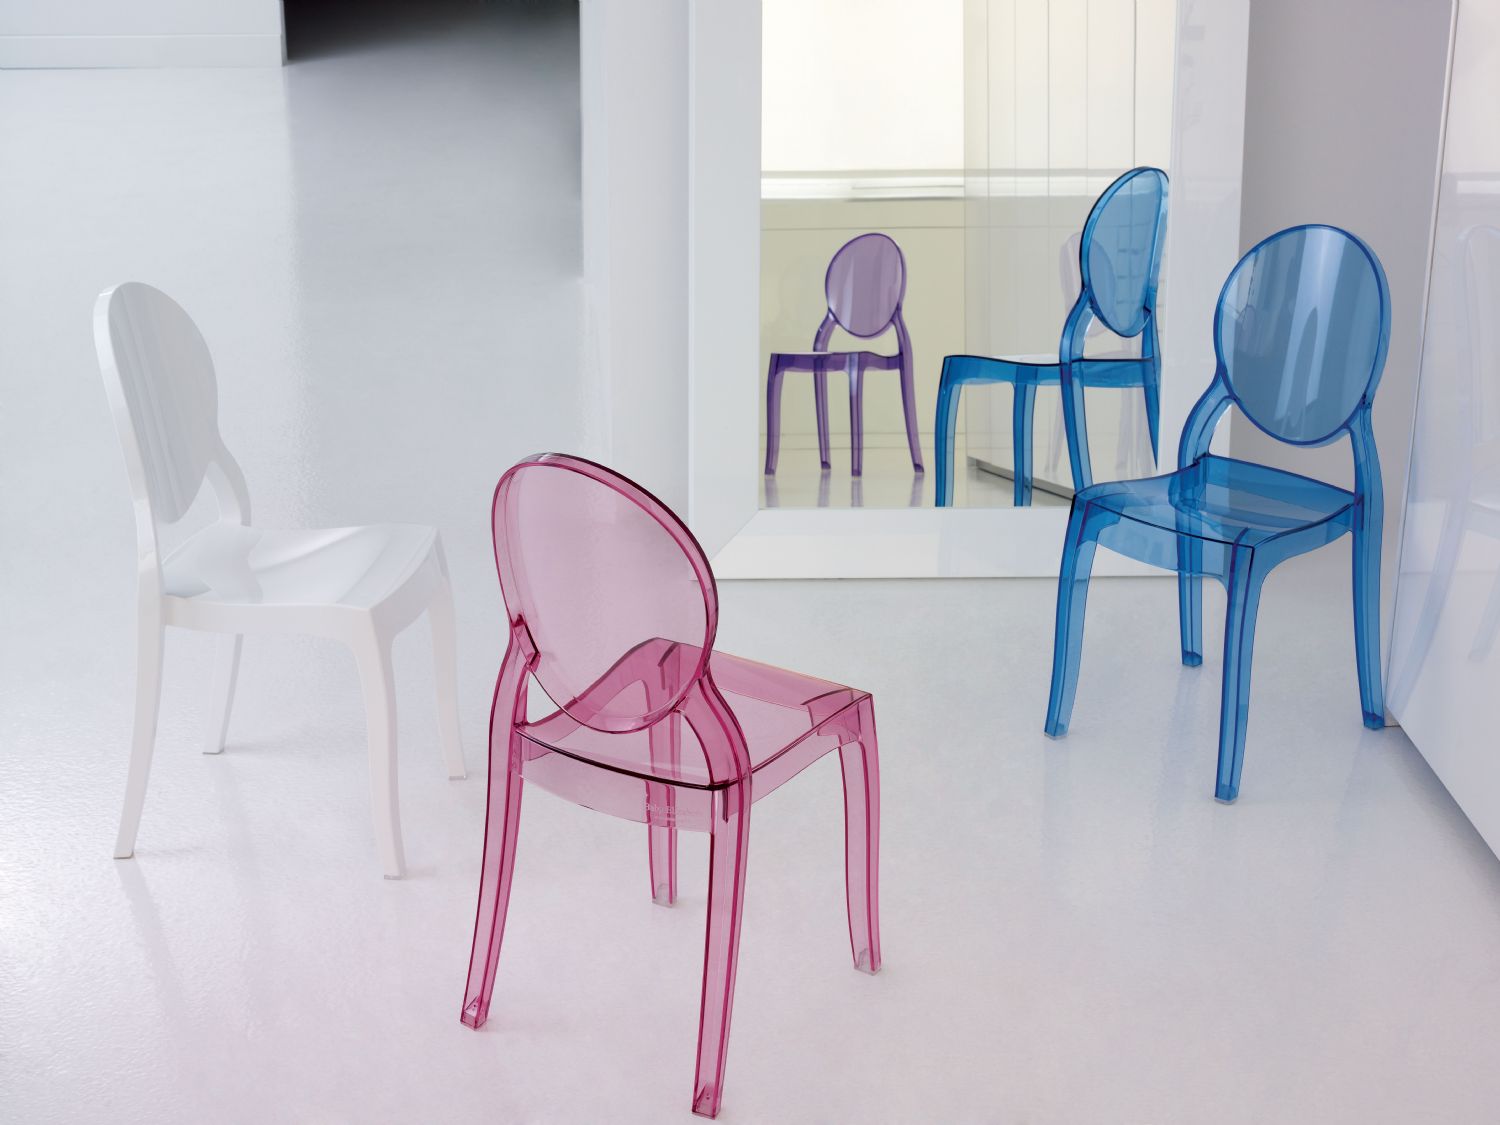 Baby Elizabeth Kids Chair Transparent Pink ISP051-TPNK - 6